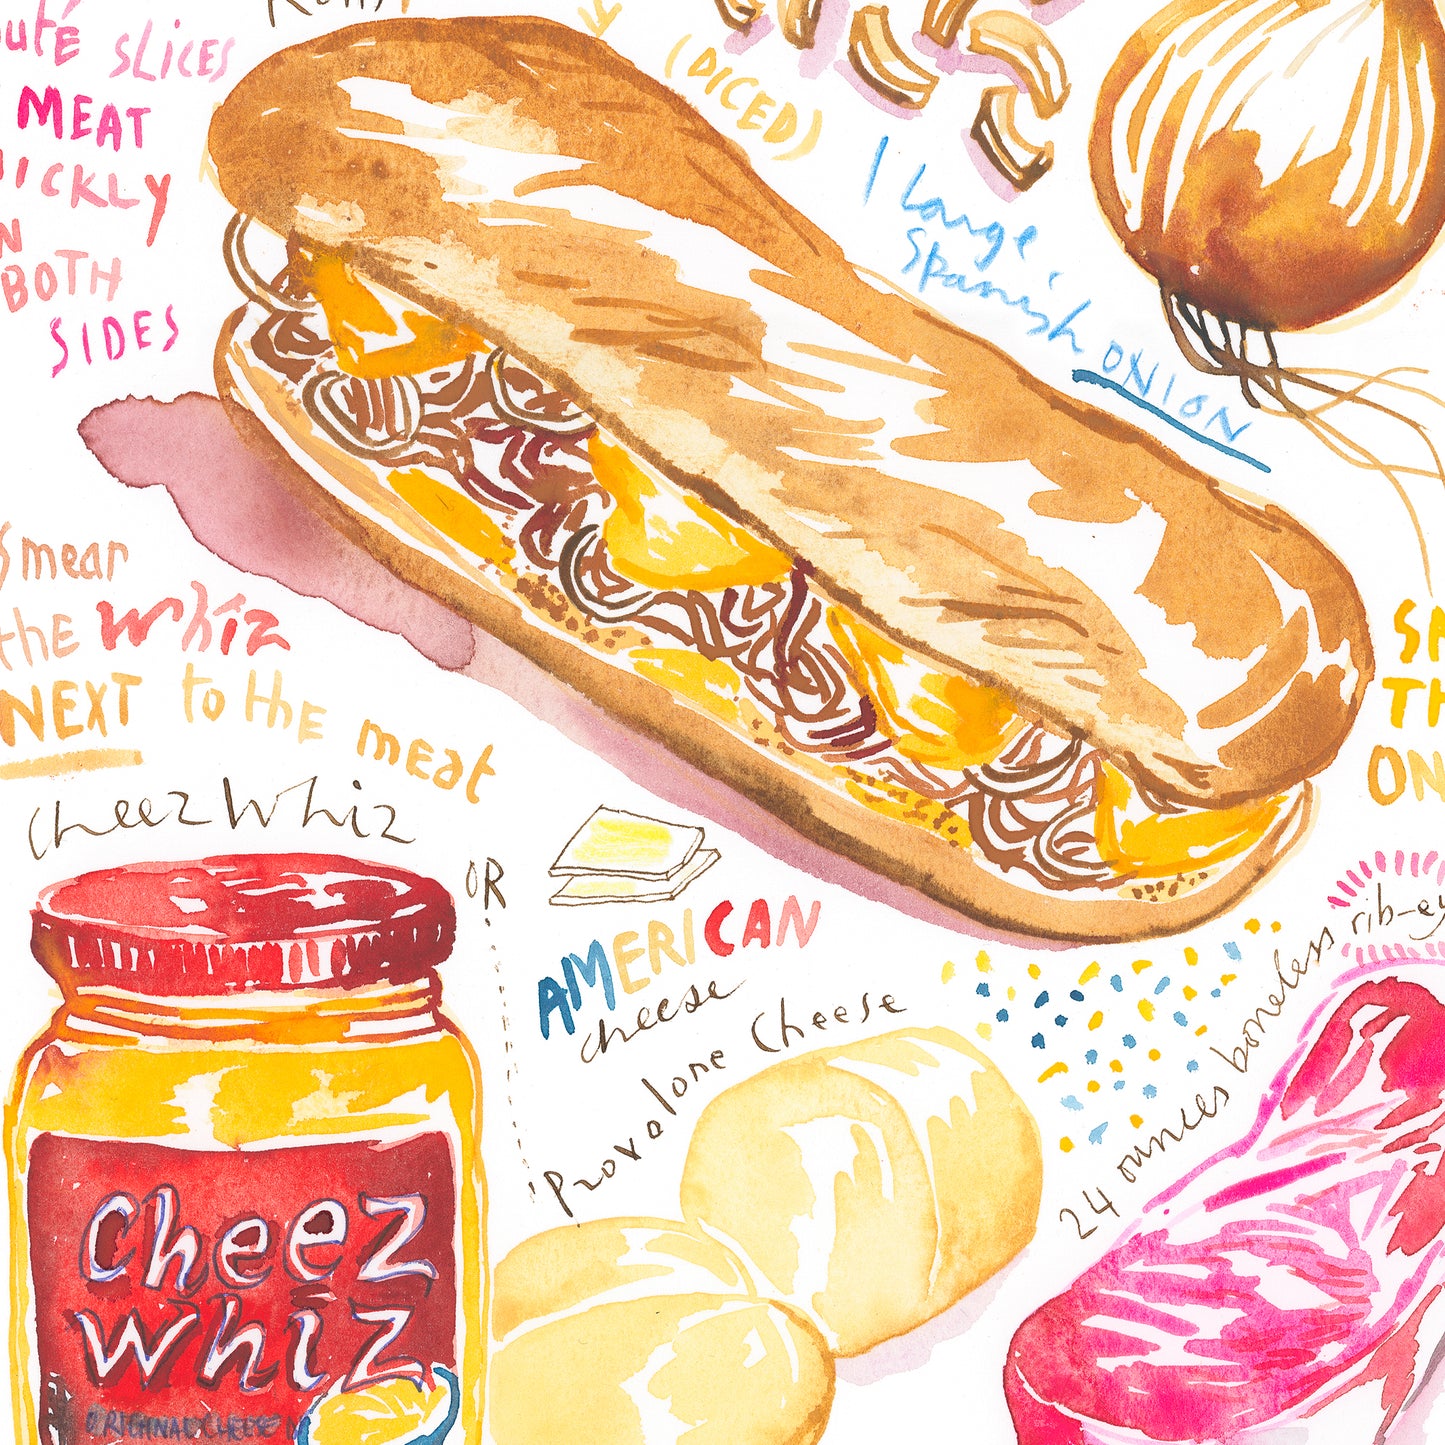 Philly Cheesesteak recipe - Original watercolor painting